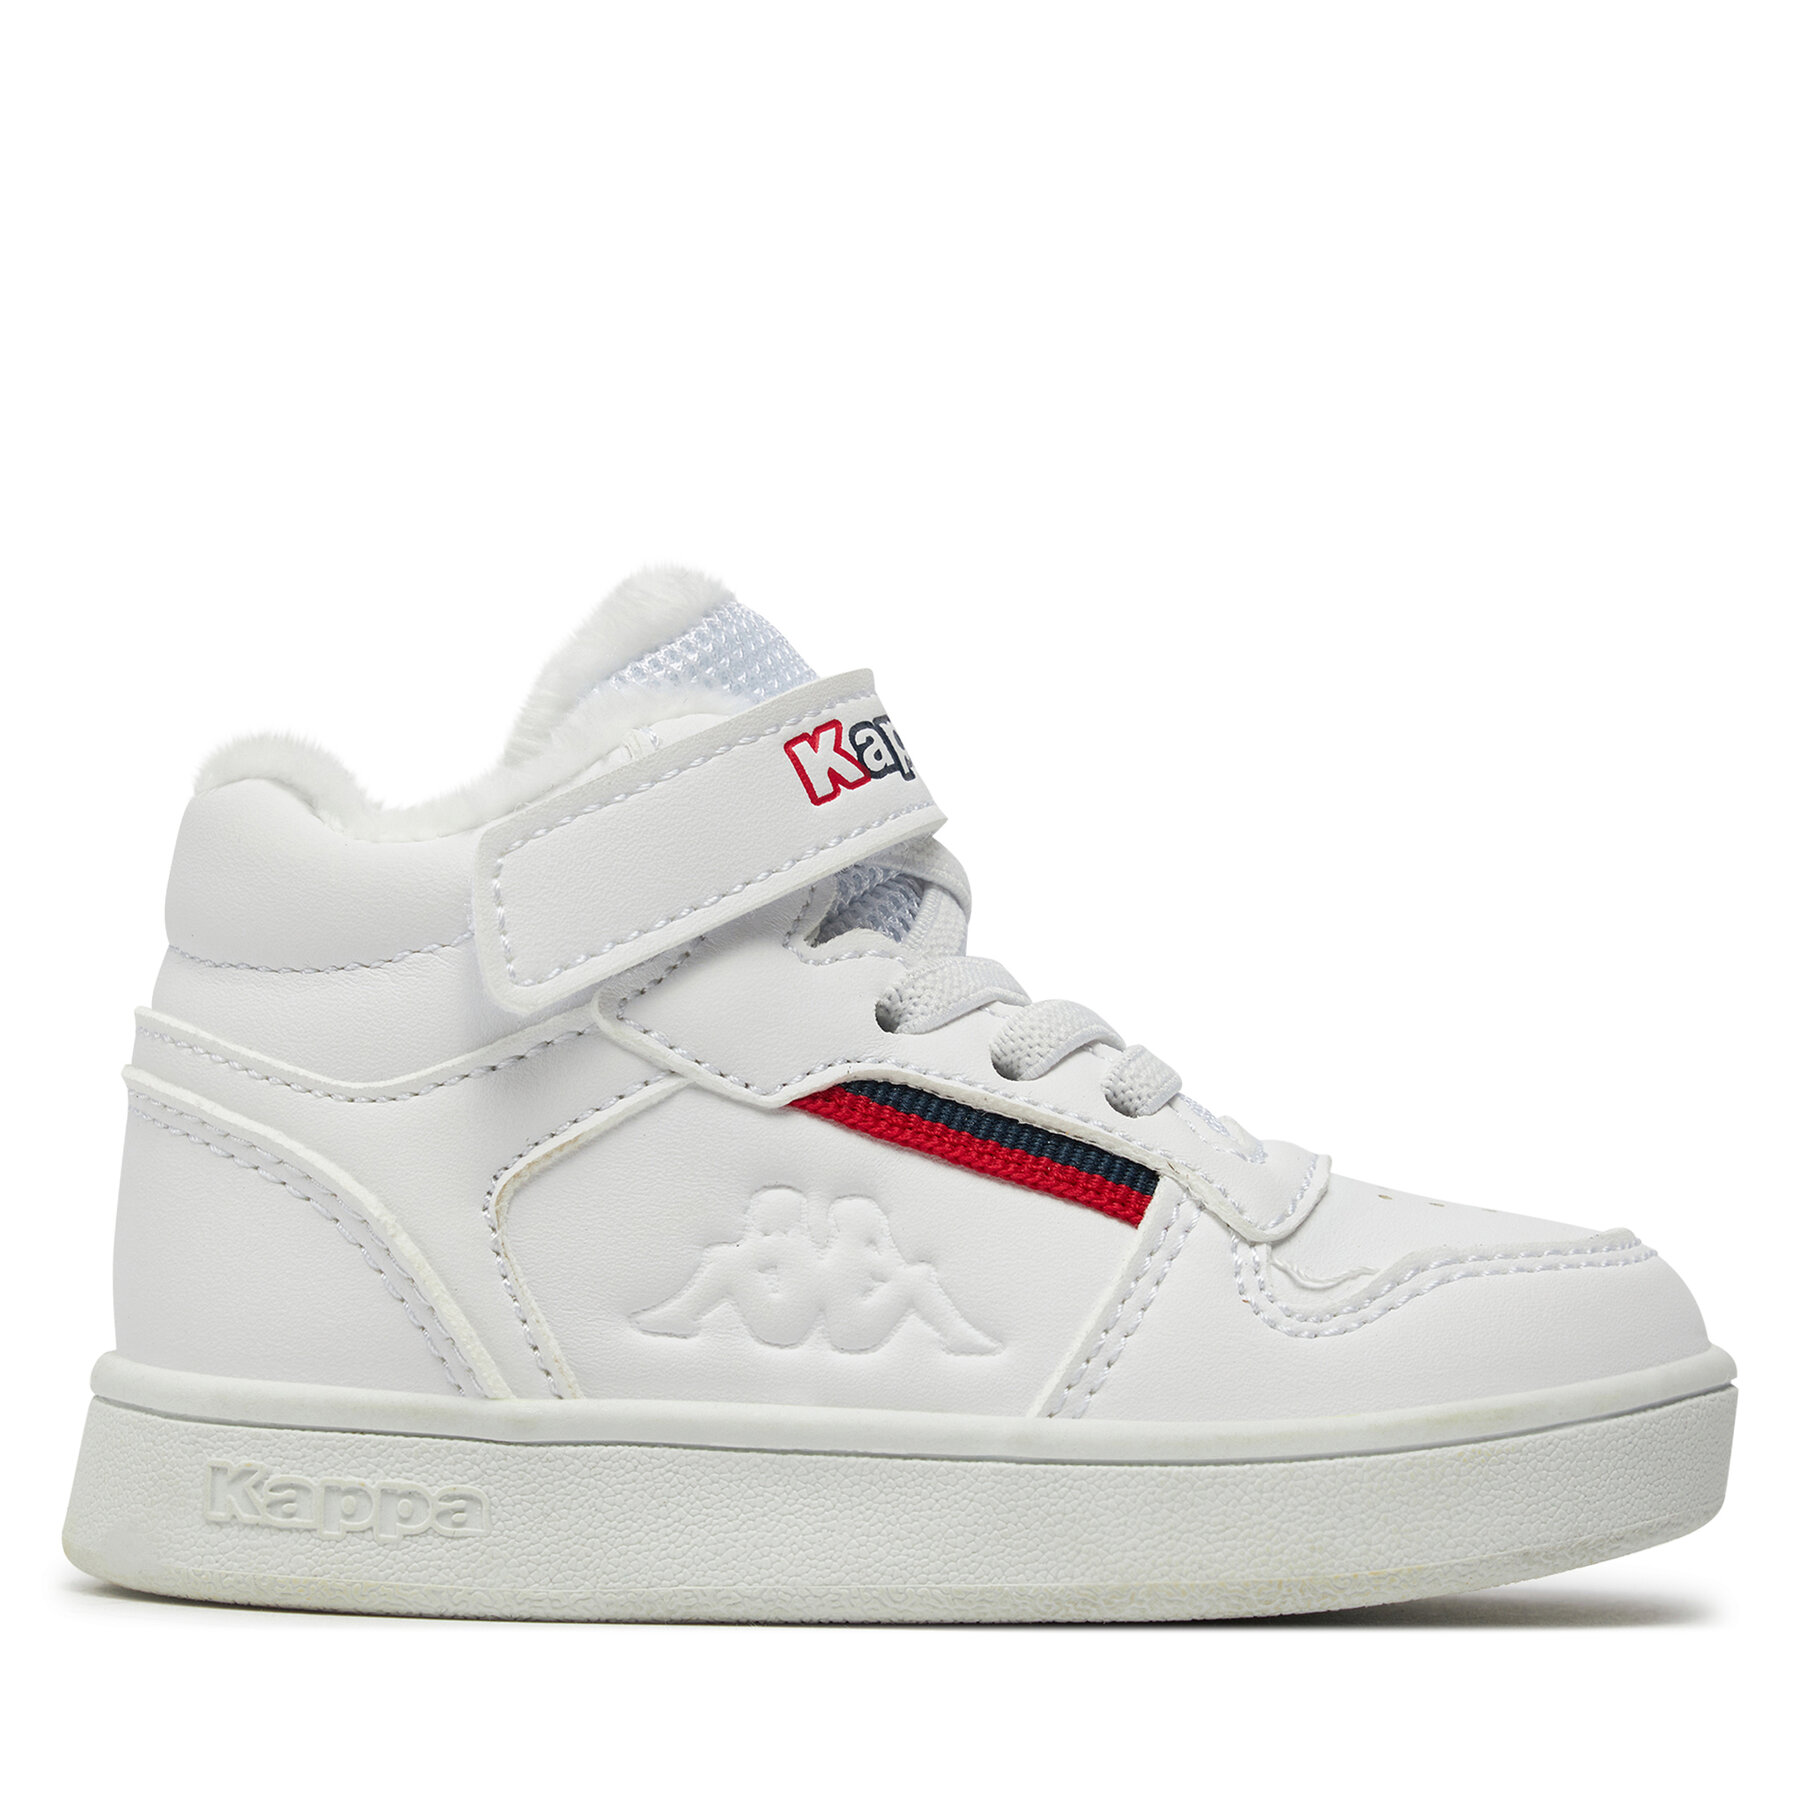 Sneakers Kappa 280017ICEM White/Red 1020 von Kappa